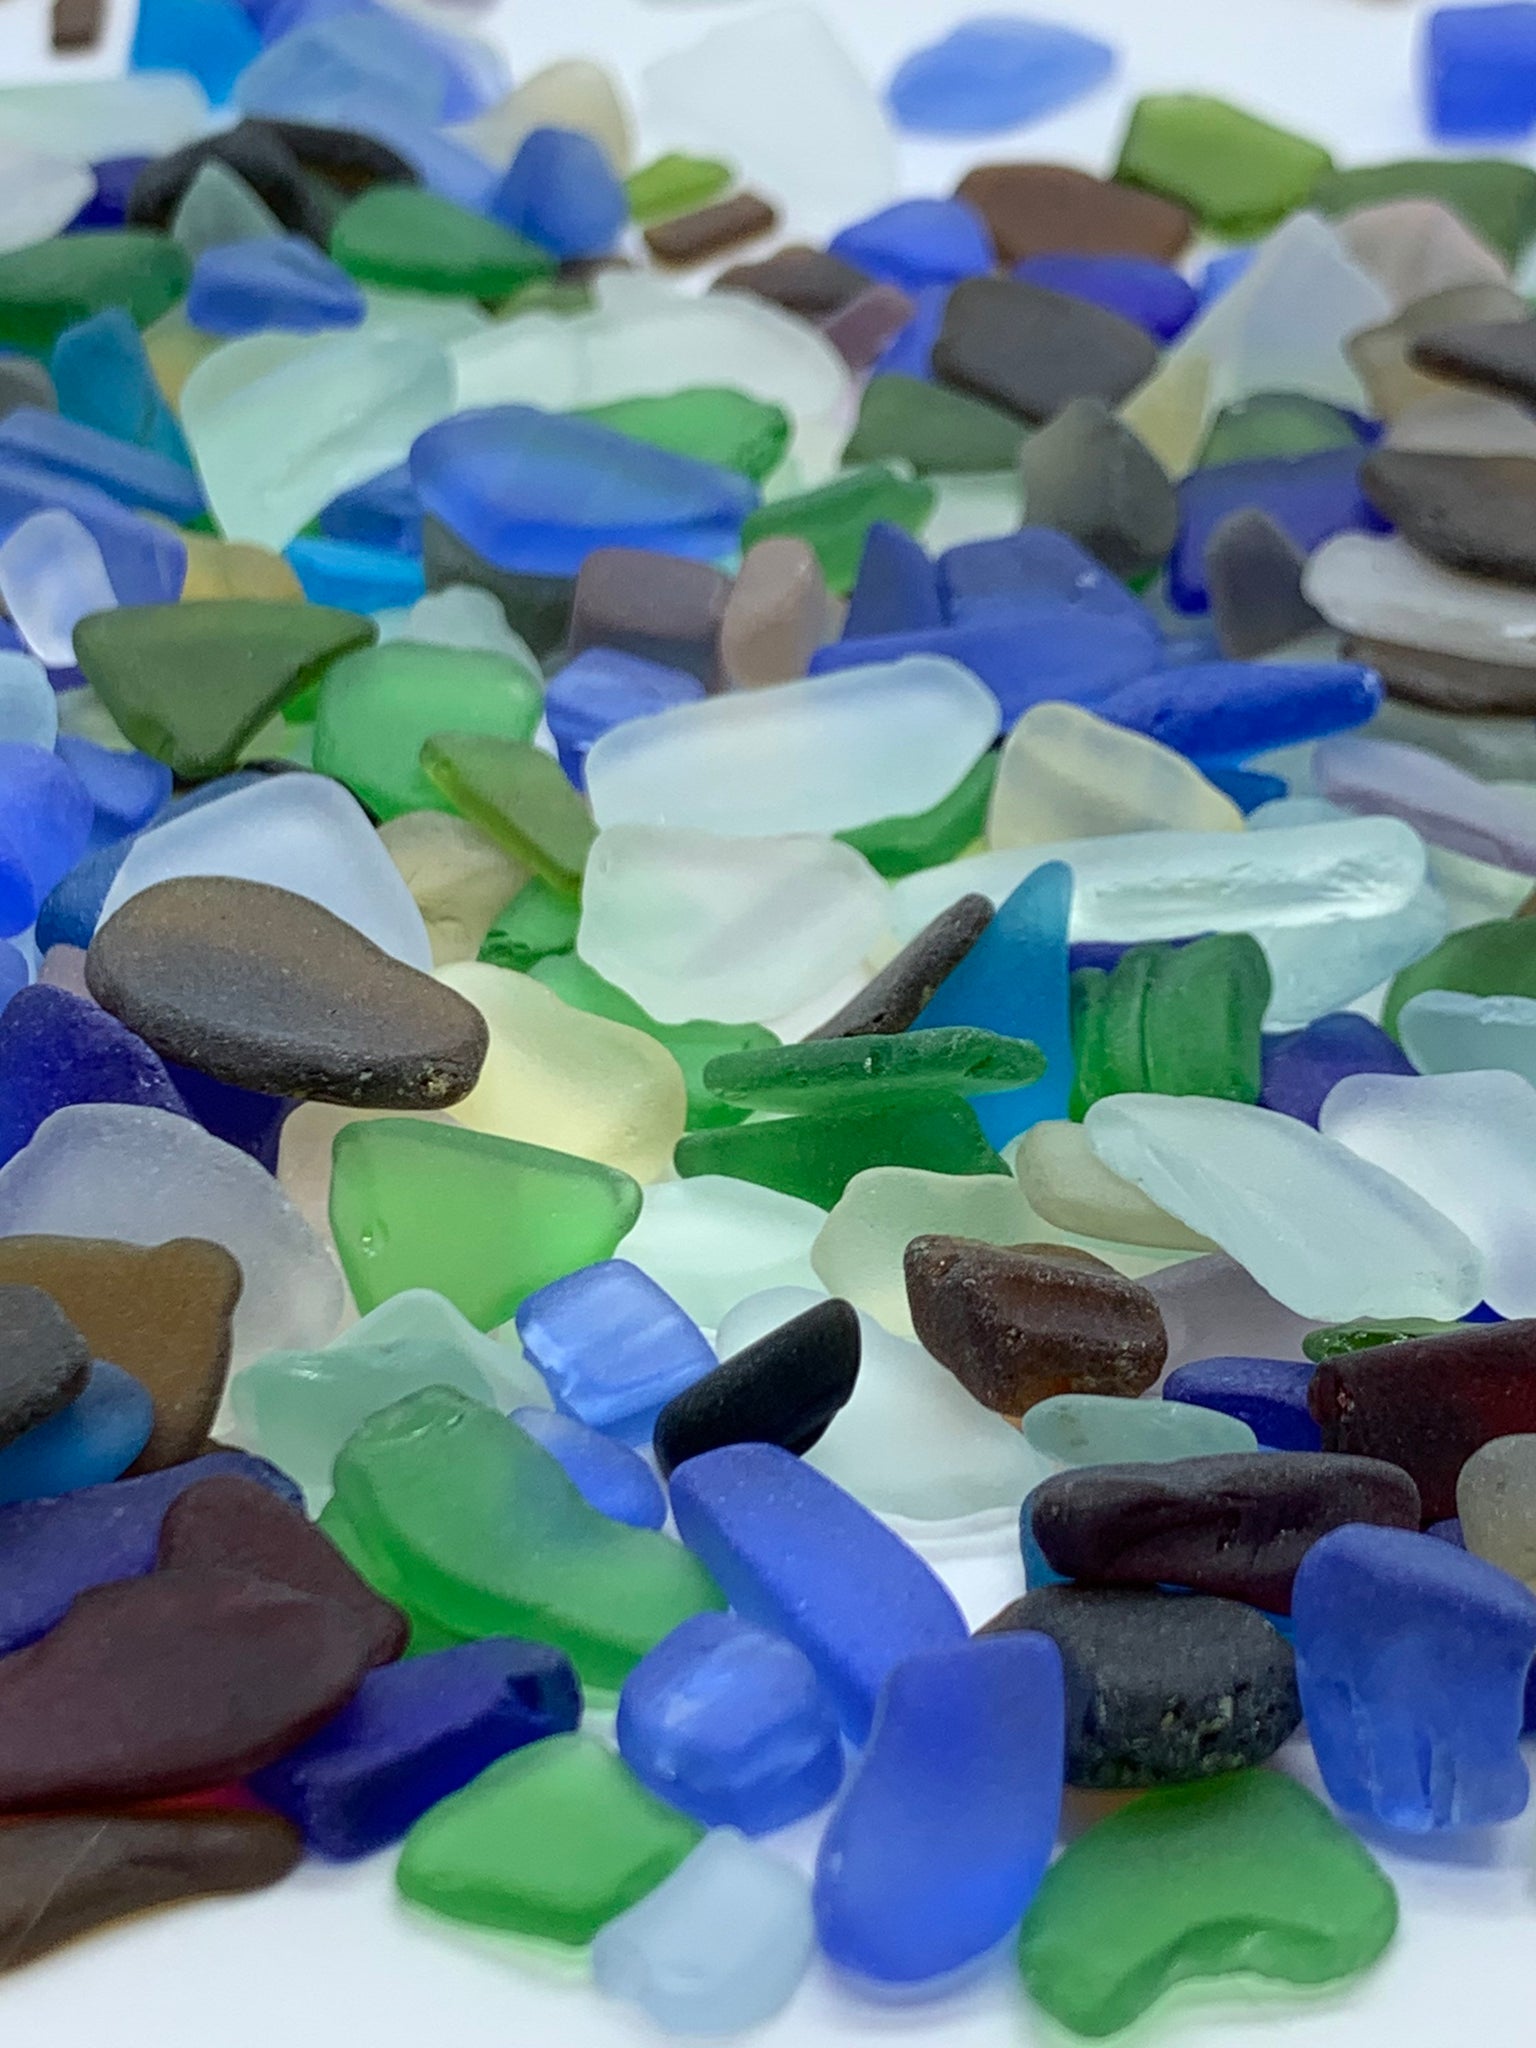 2lb 7oz Bag of Blue & White Sea Glass Bulk Tumbled Ornamental Seaglass  Pieces